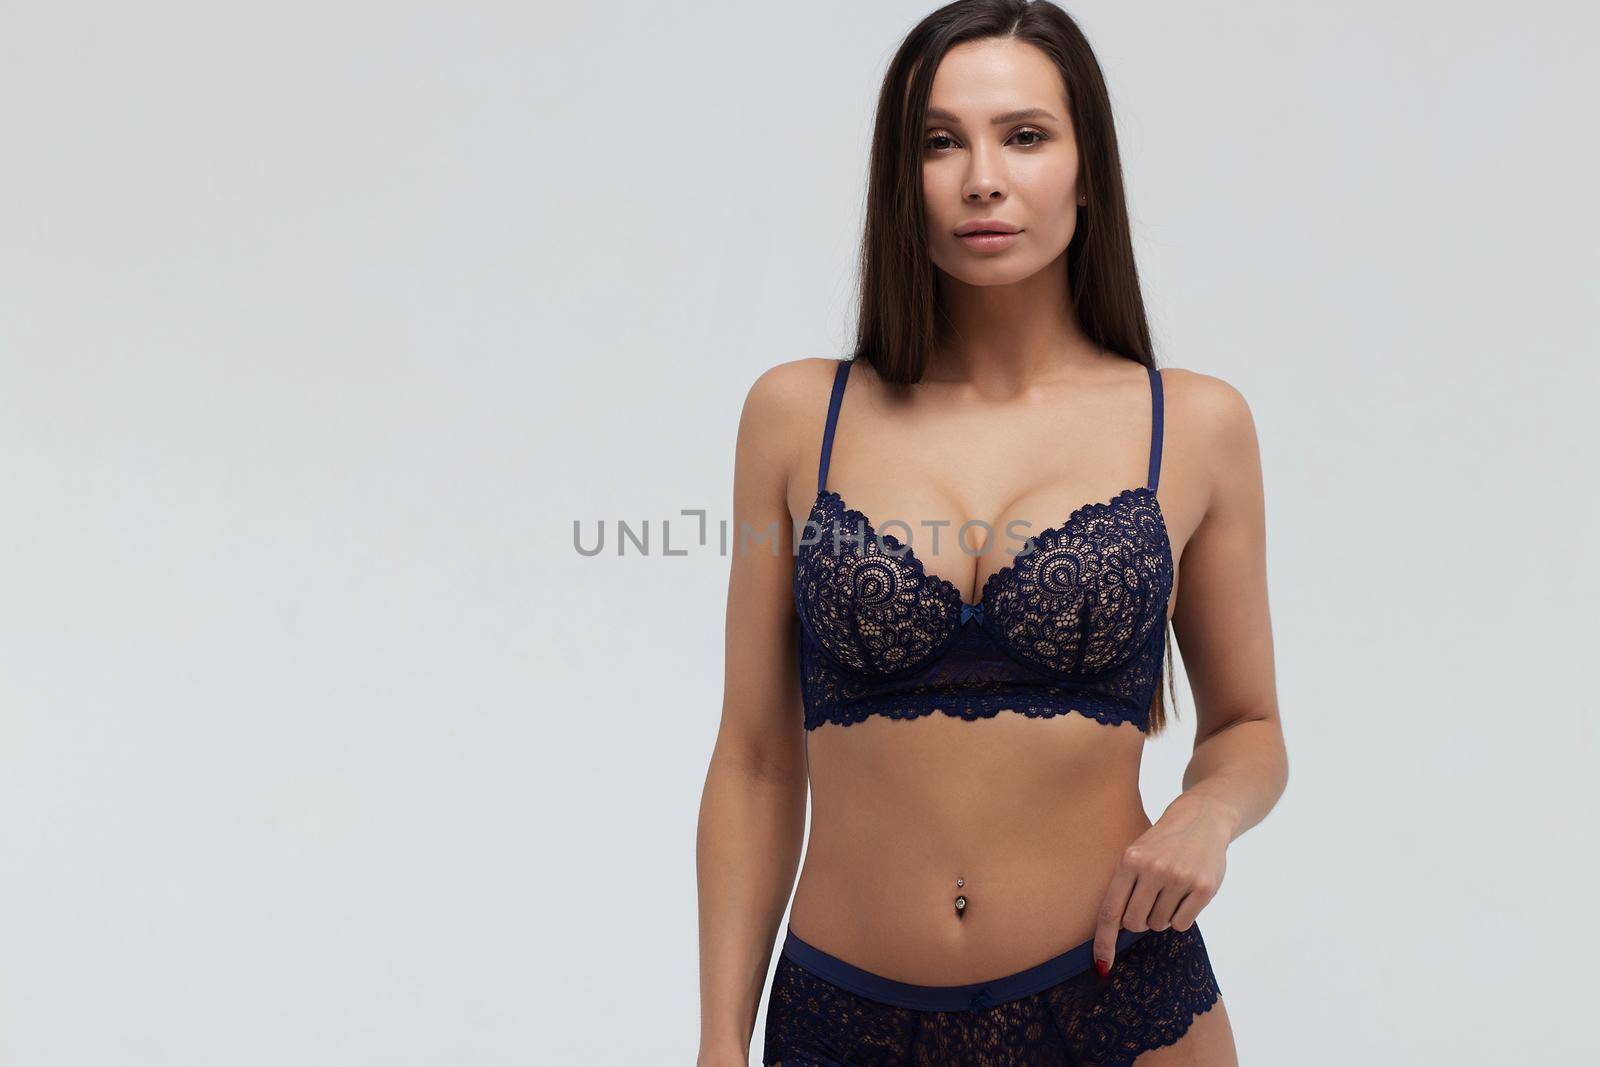 Serene slim female in dark blue lace underwear standing on white background in studio and looking away